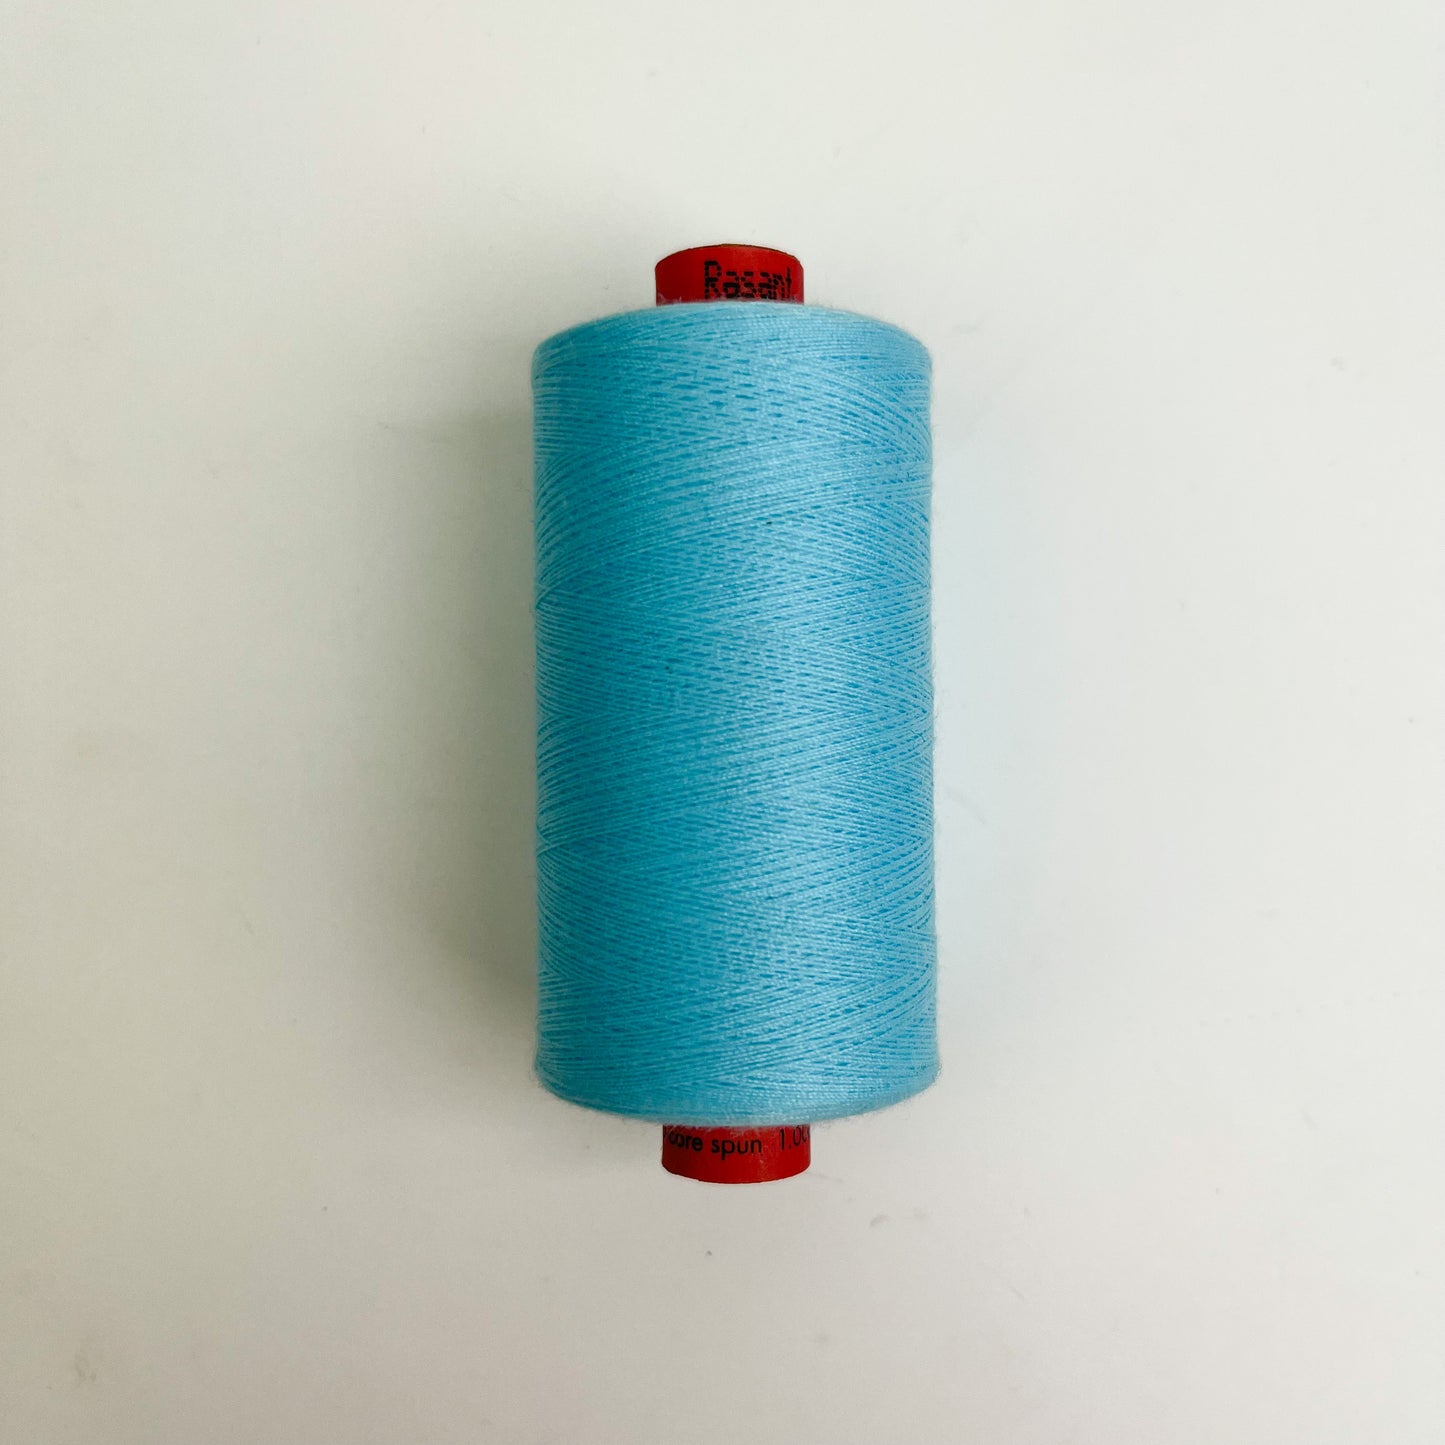 Rasant Thread - 1000m - Sky Blue 5094